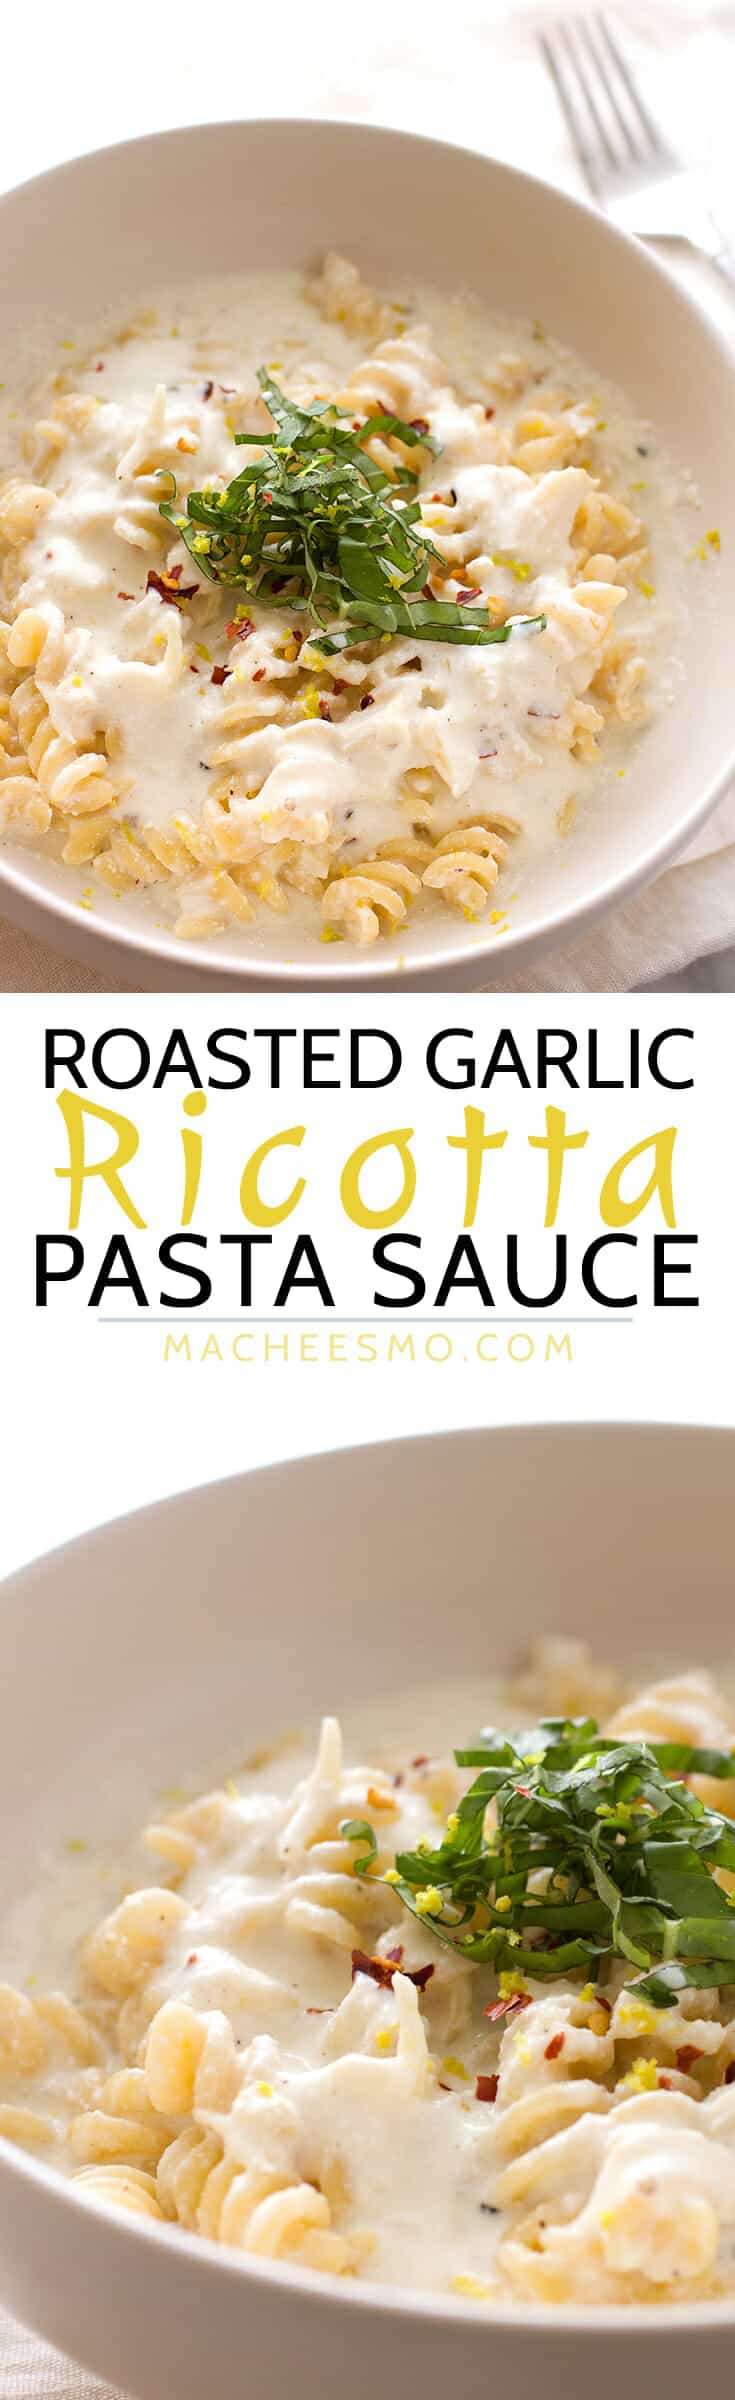 Pin for ricotta pasta sauce.